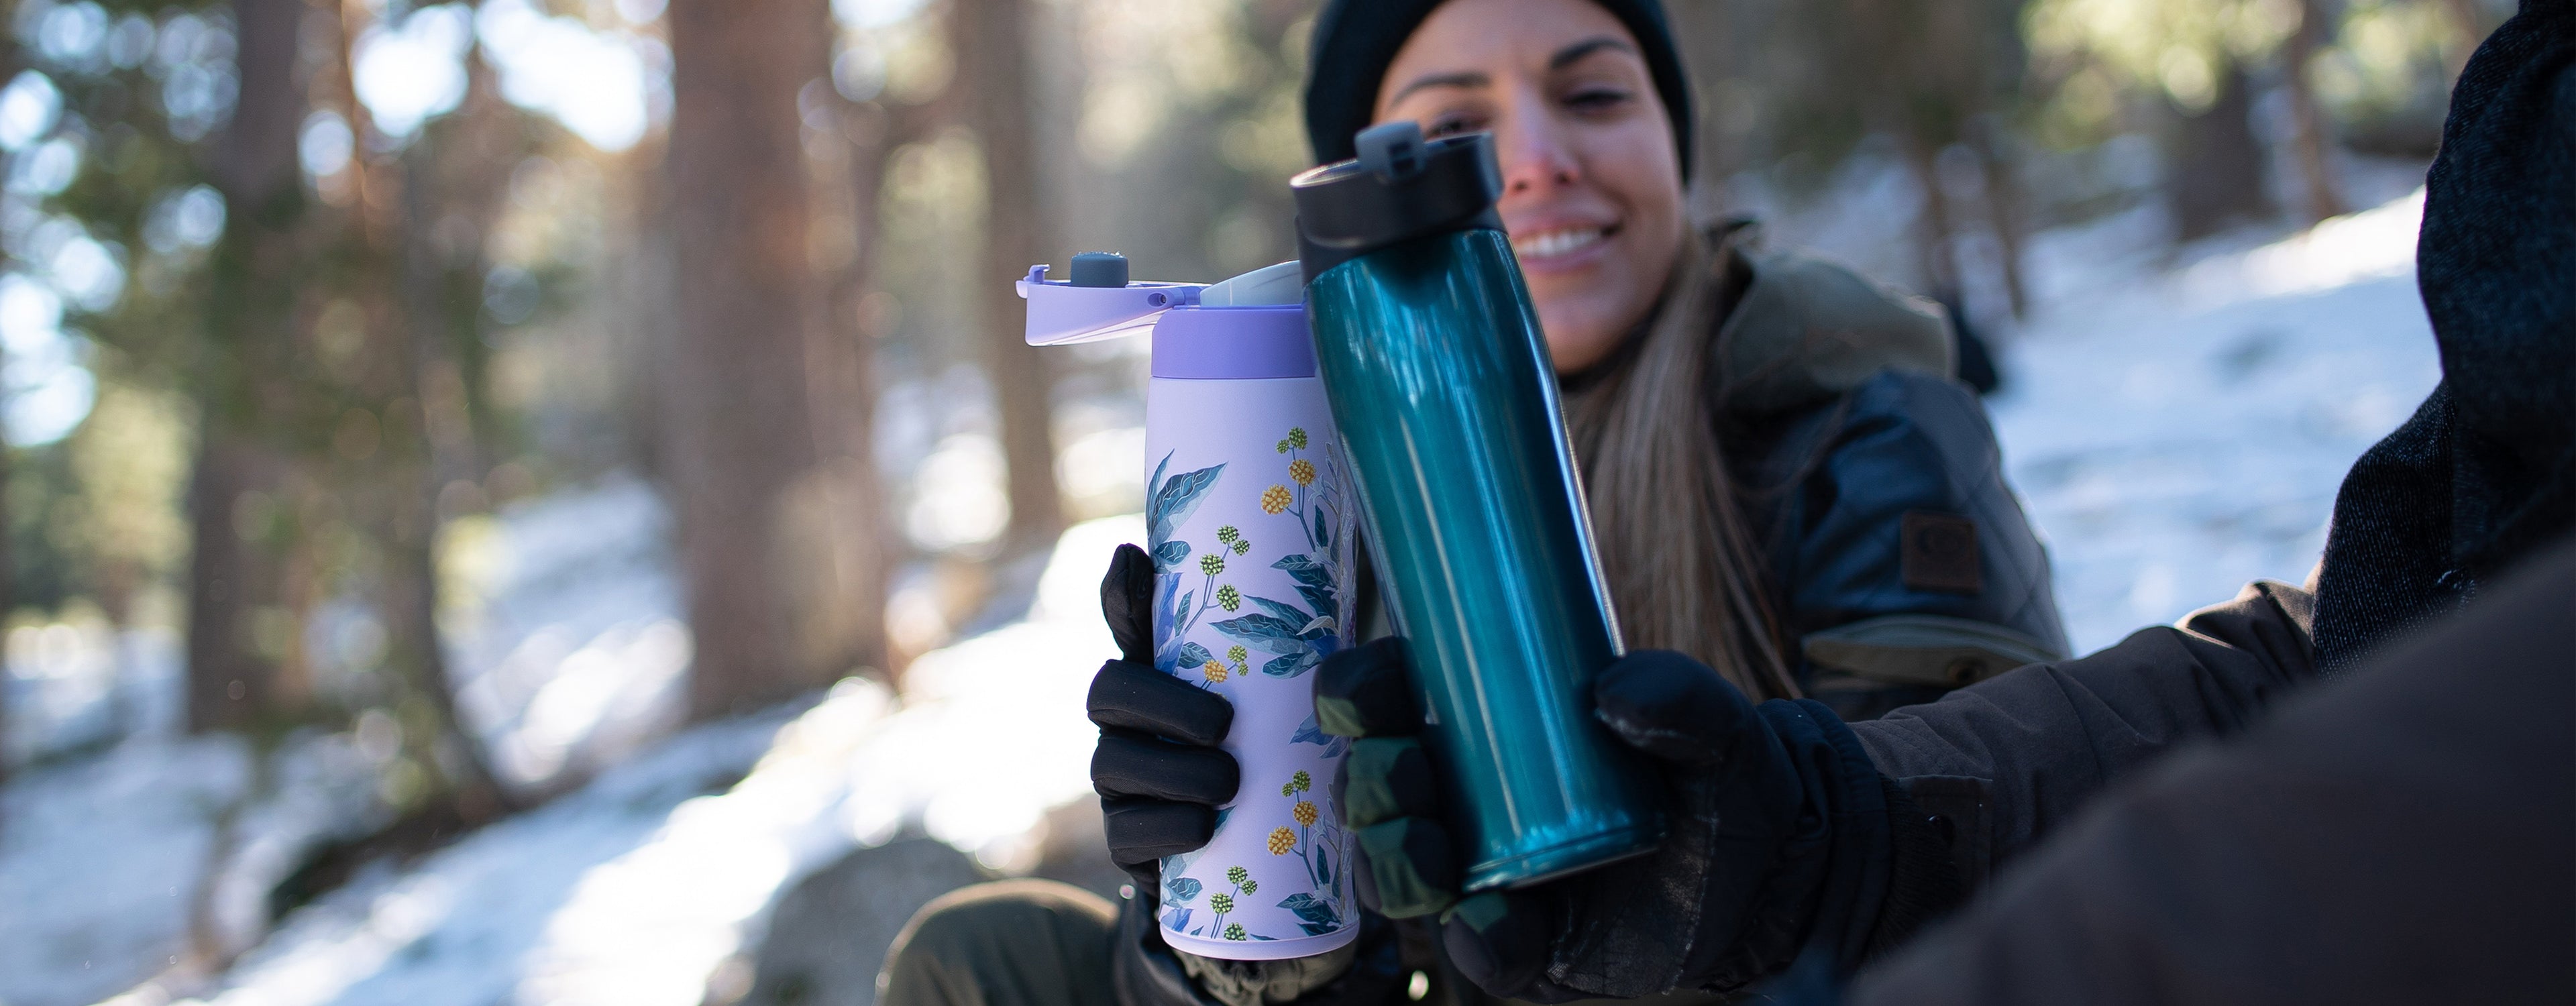 Super Sparrow Sports Water Bottle Multi-Size BPA Free Eco-Friendly Tritan  Co-P